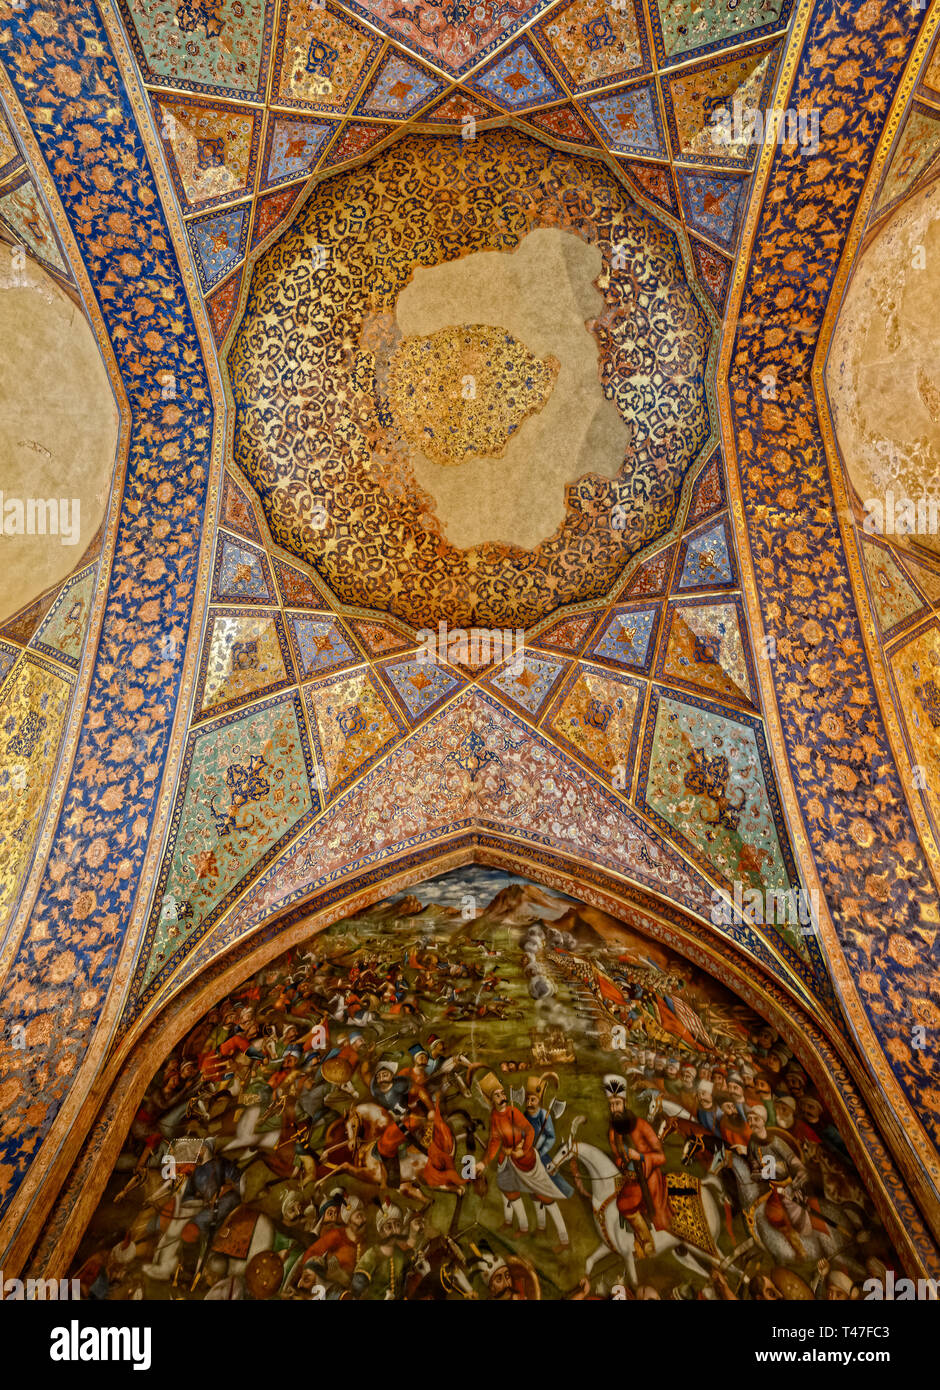 Amy reid in Isfahan